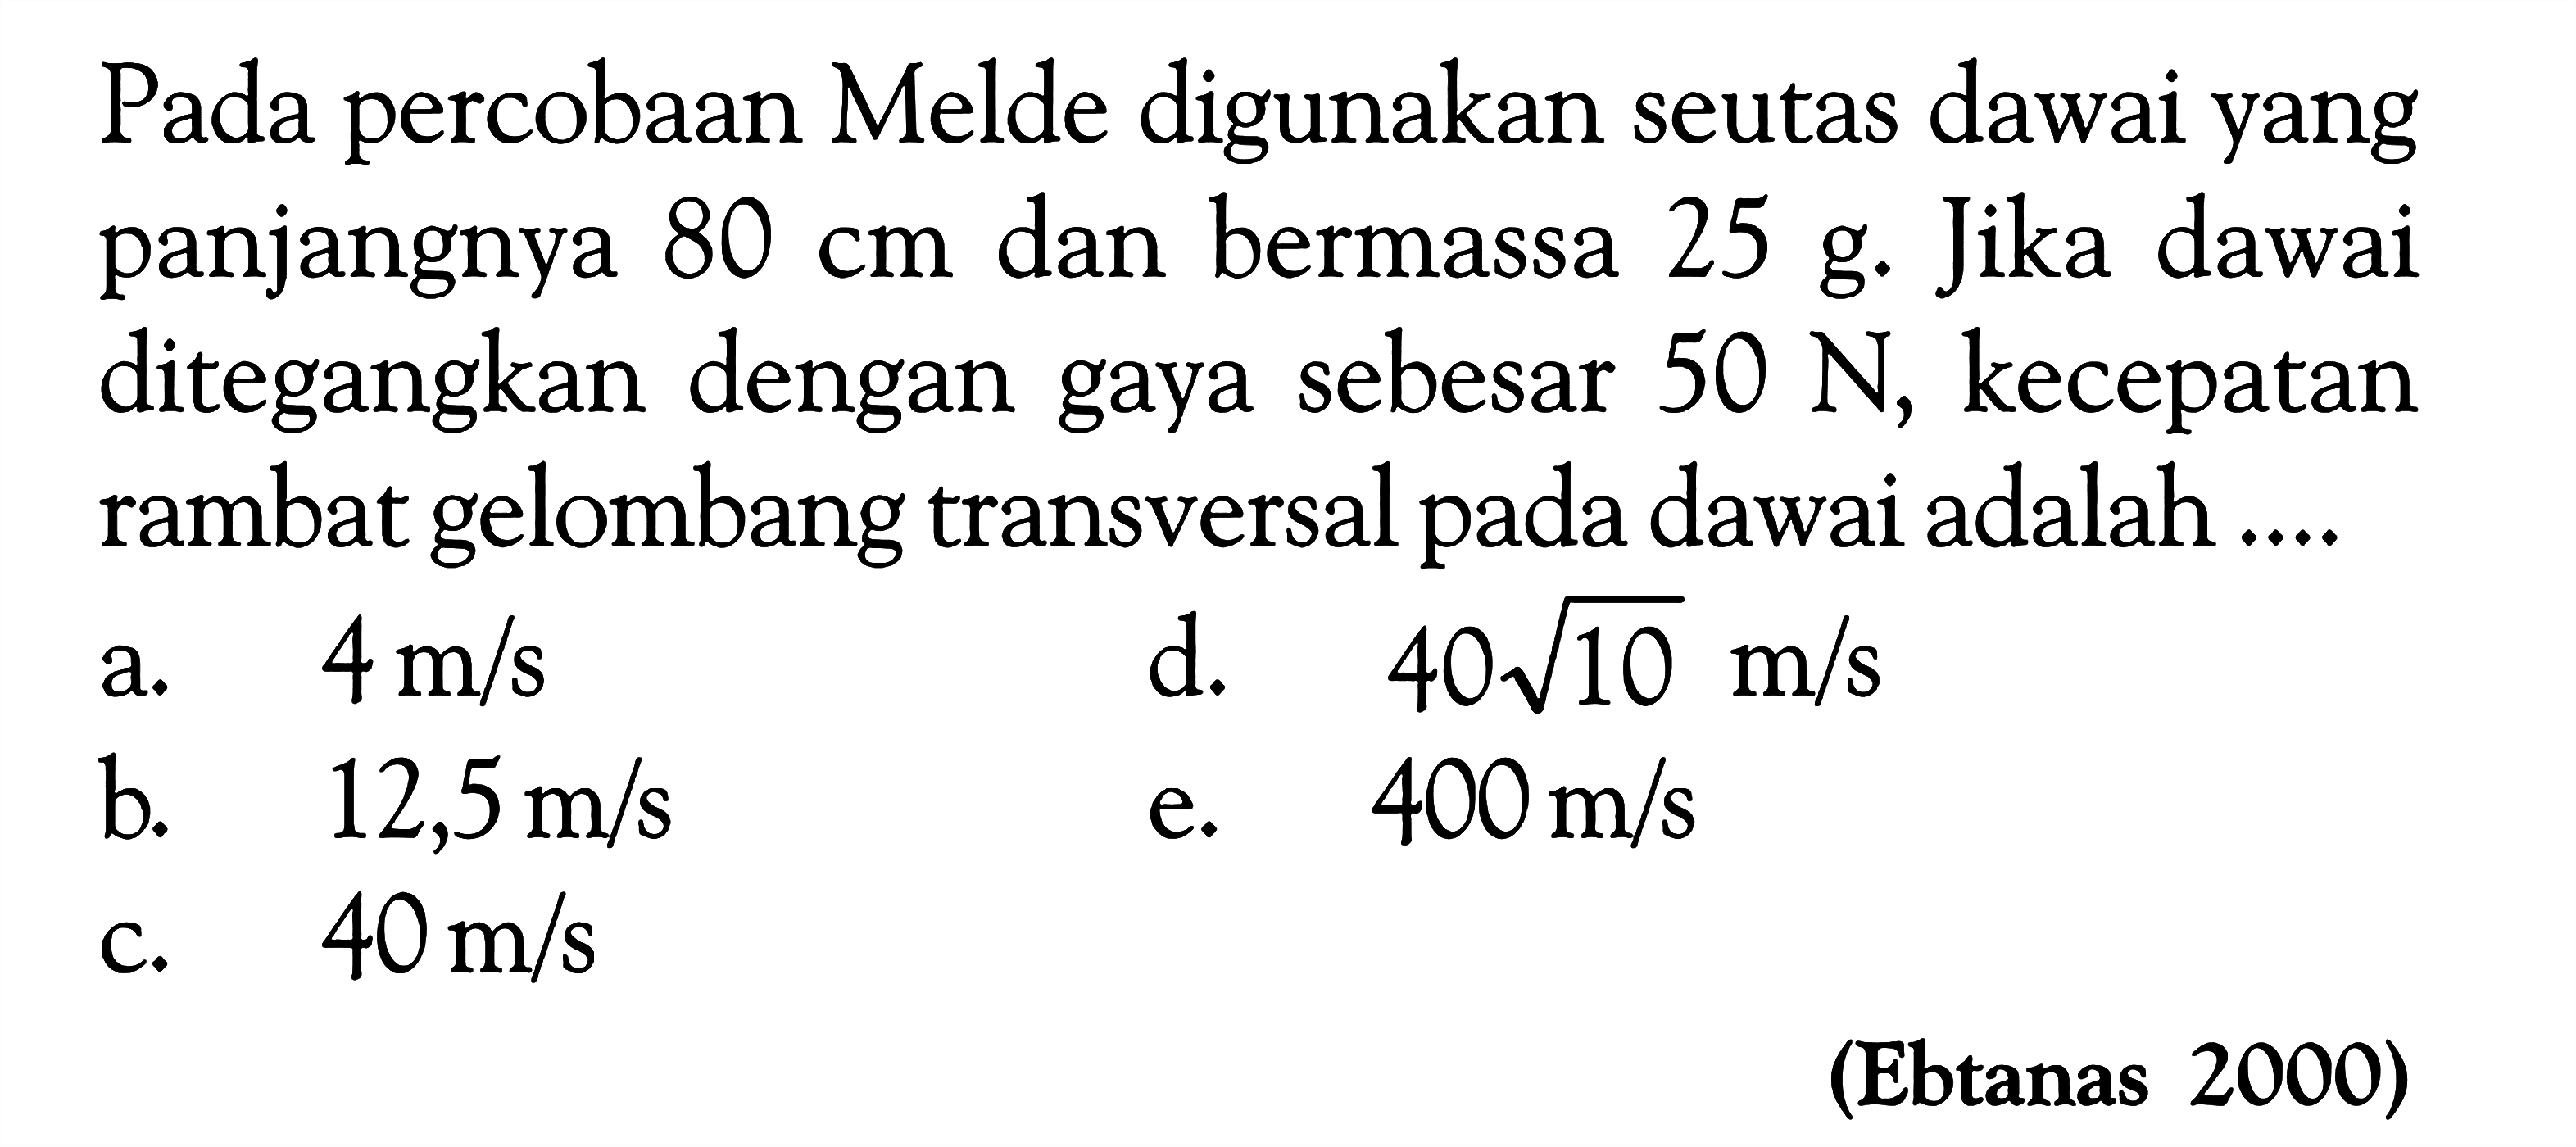 Pada percobaan Melde digunakan seutas dawai yang panjangnya  80 cm  dan bermassa 25 g. Jika dawai ditegangkan dengan gaya sebesar  50 N, kecepatan rambat gelombang transversal pada dawai adalah .... (Ebtanas 2000)
